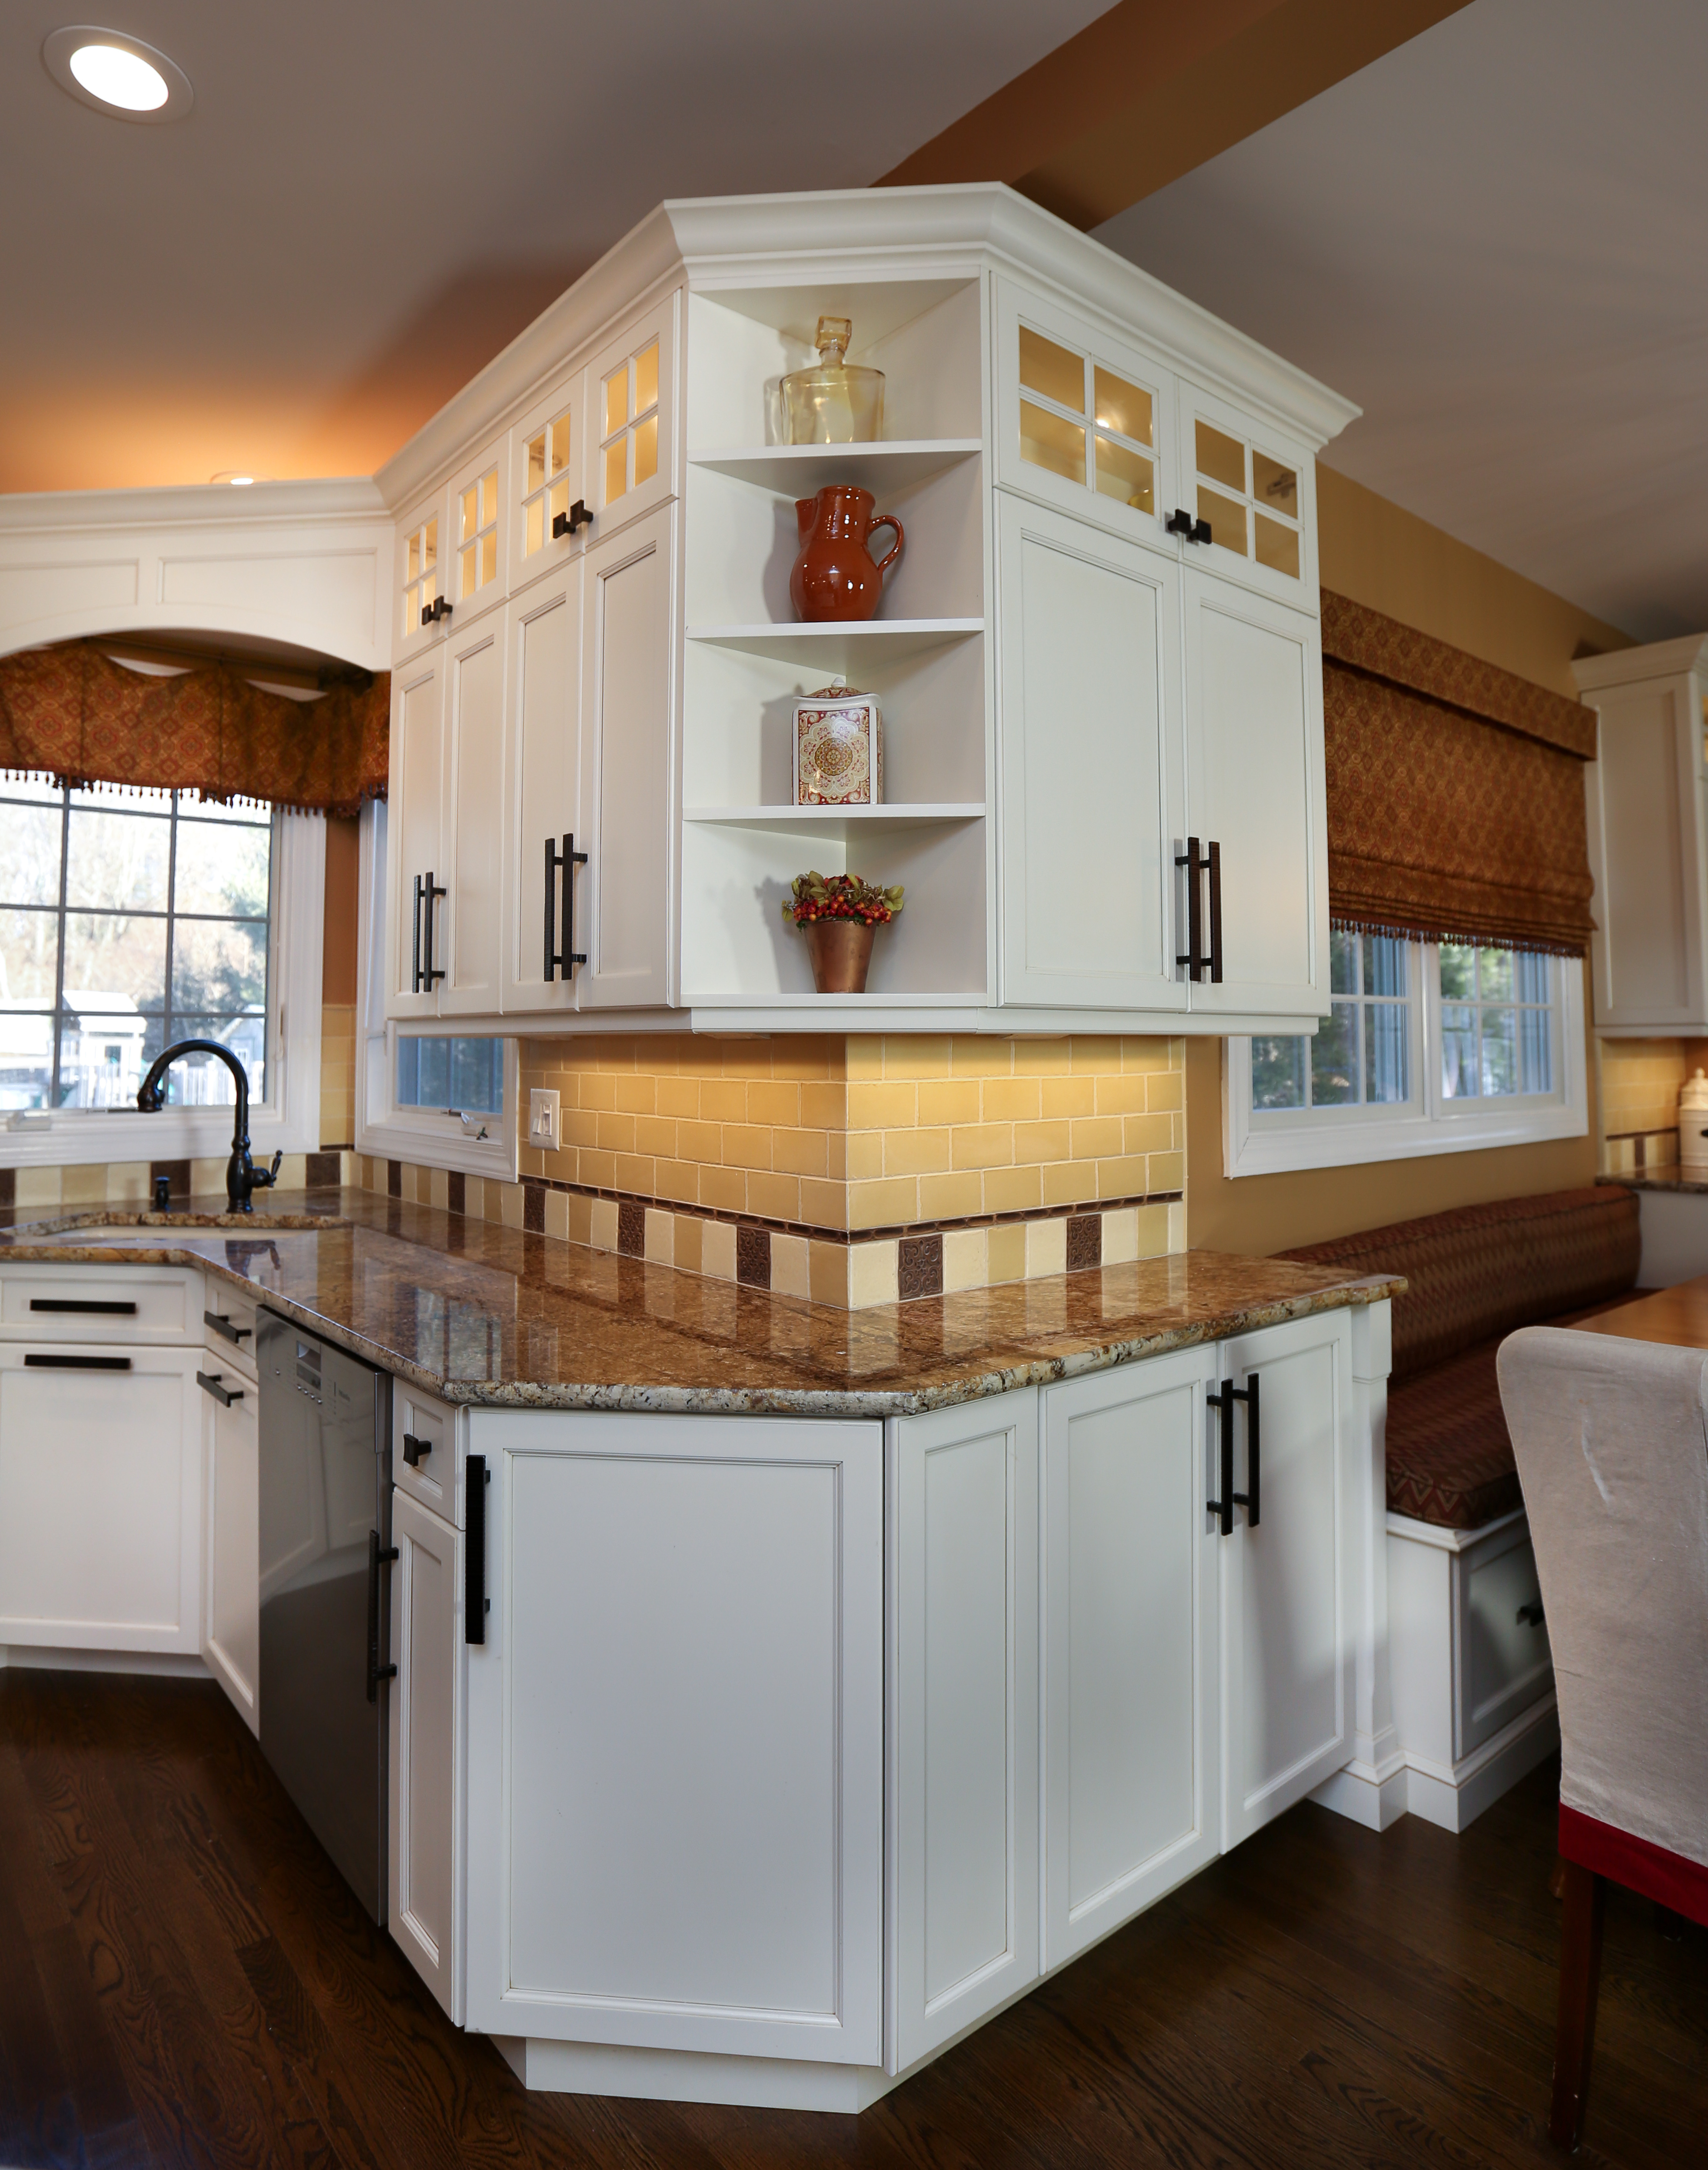 Quality Craftsmanship Colts Neck New Jersey By Design Line Kitchens